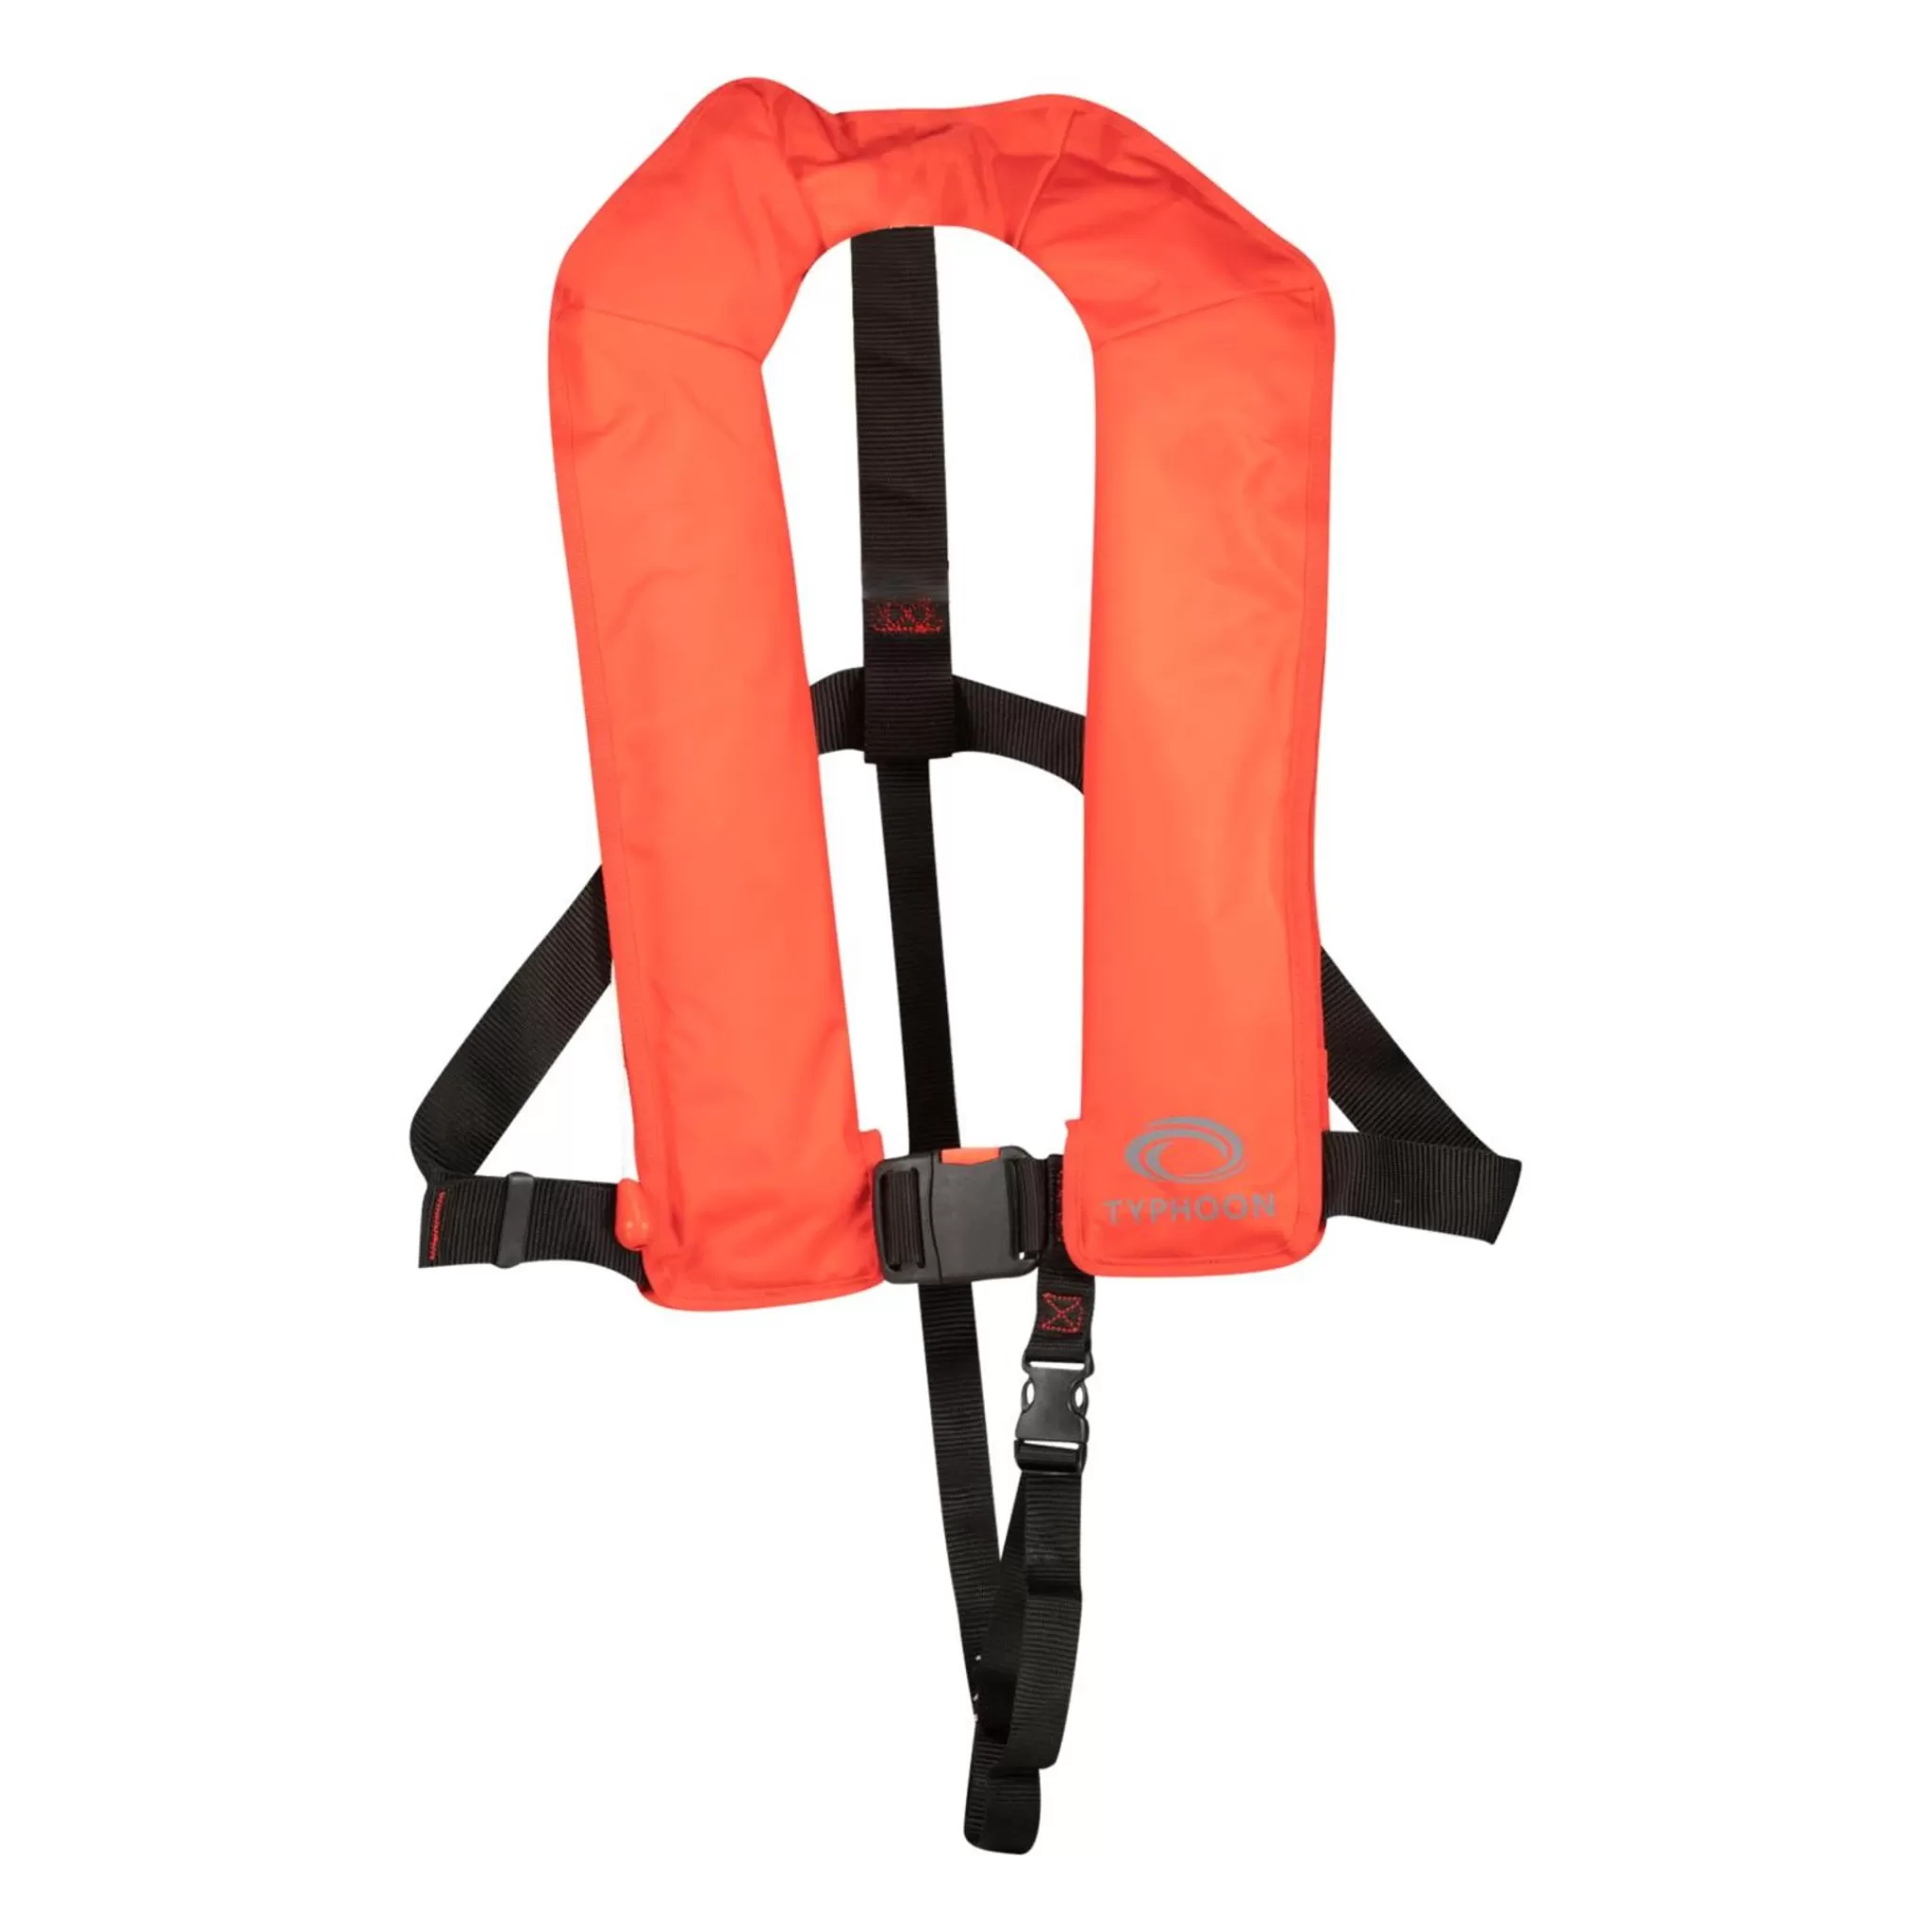 Store Typhoon Hyrdro Inflatable Lifejacket, Redningsvest